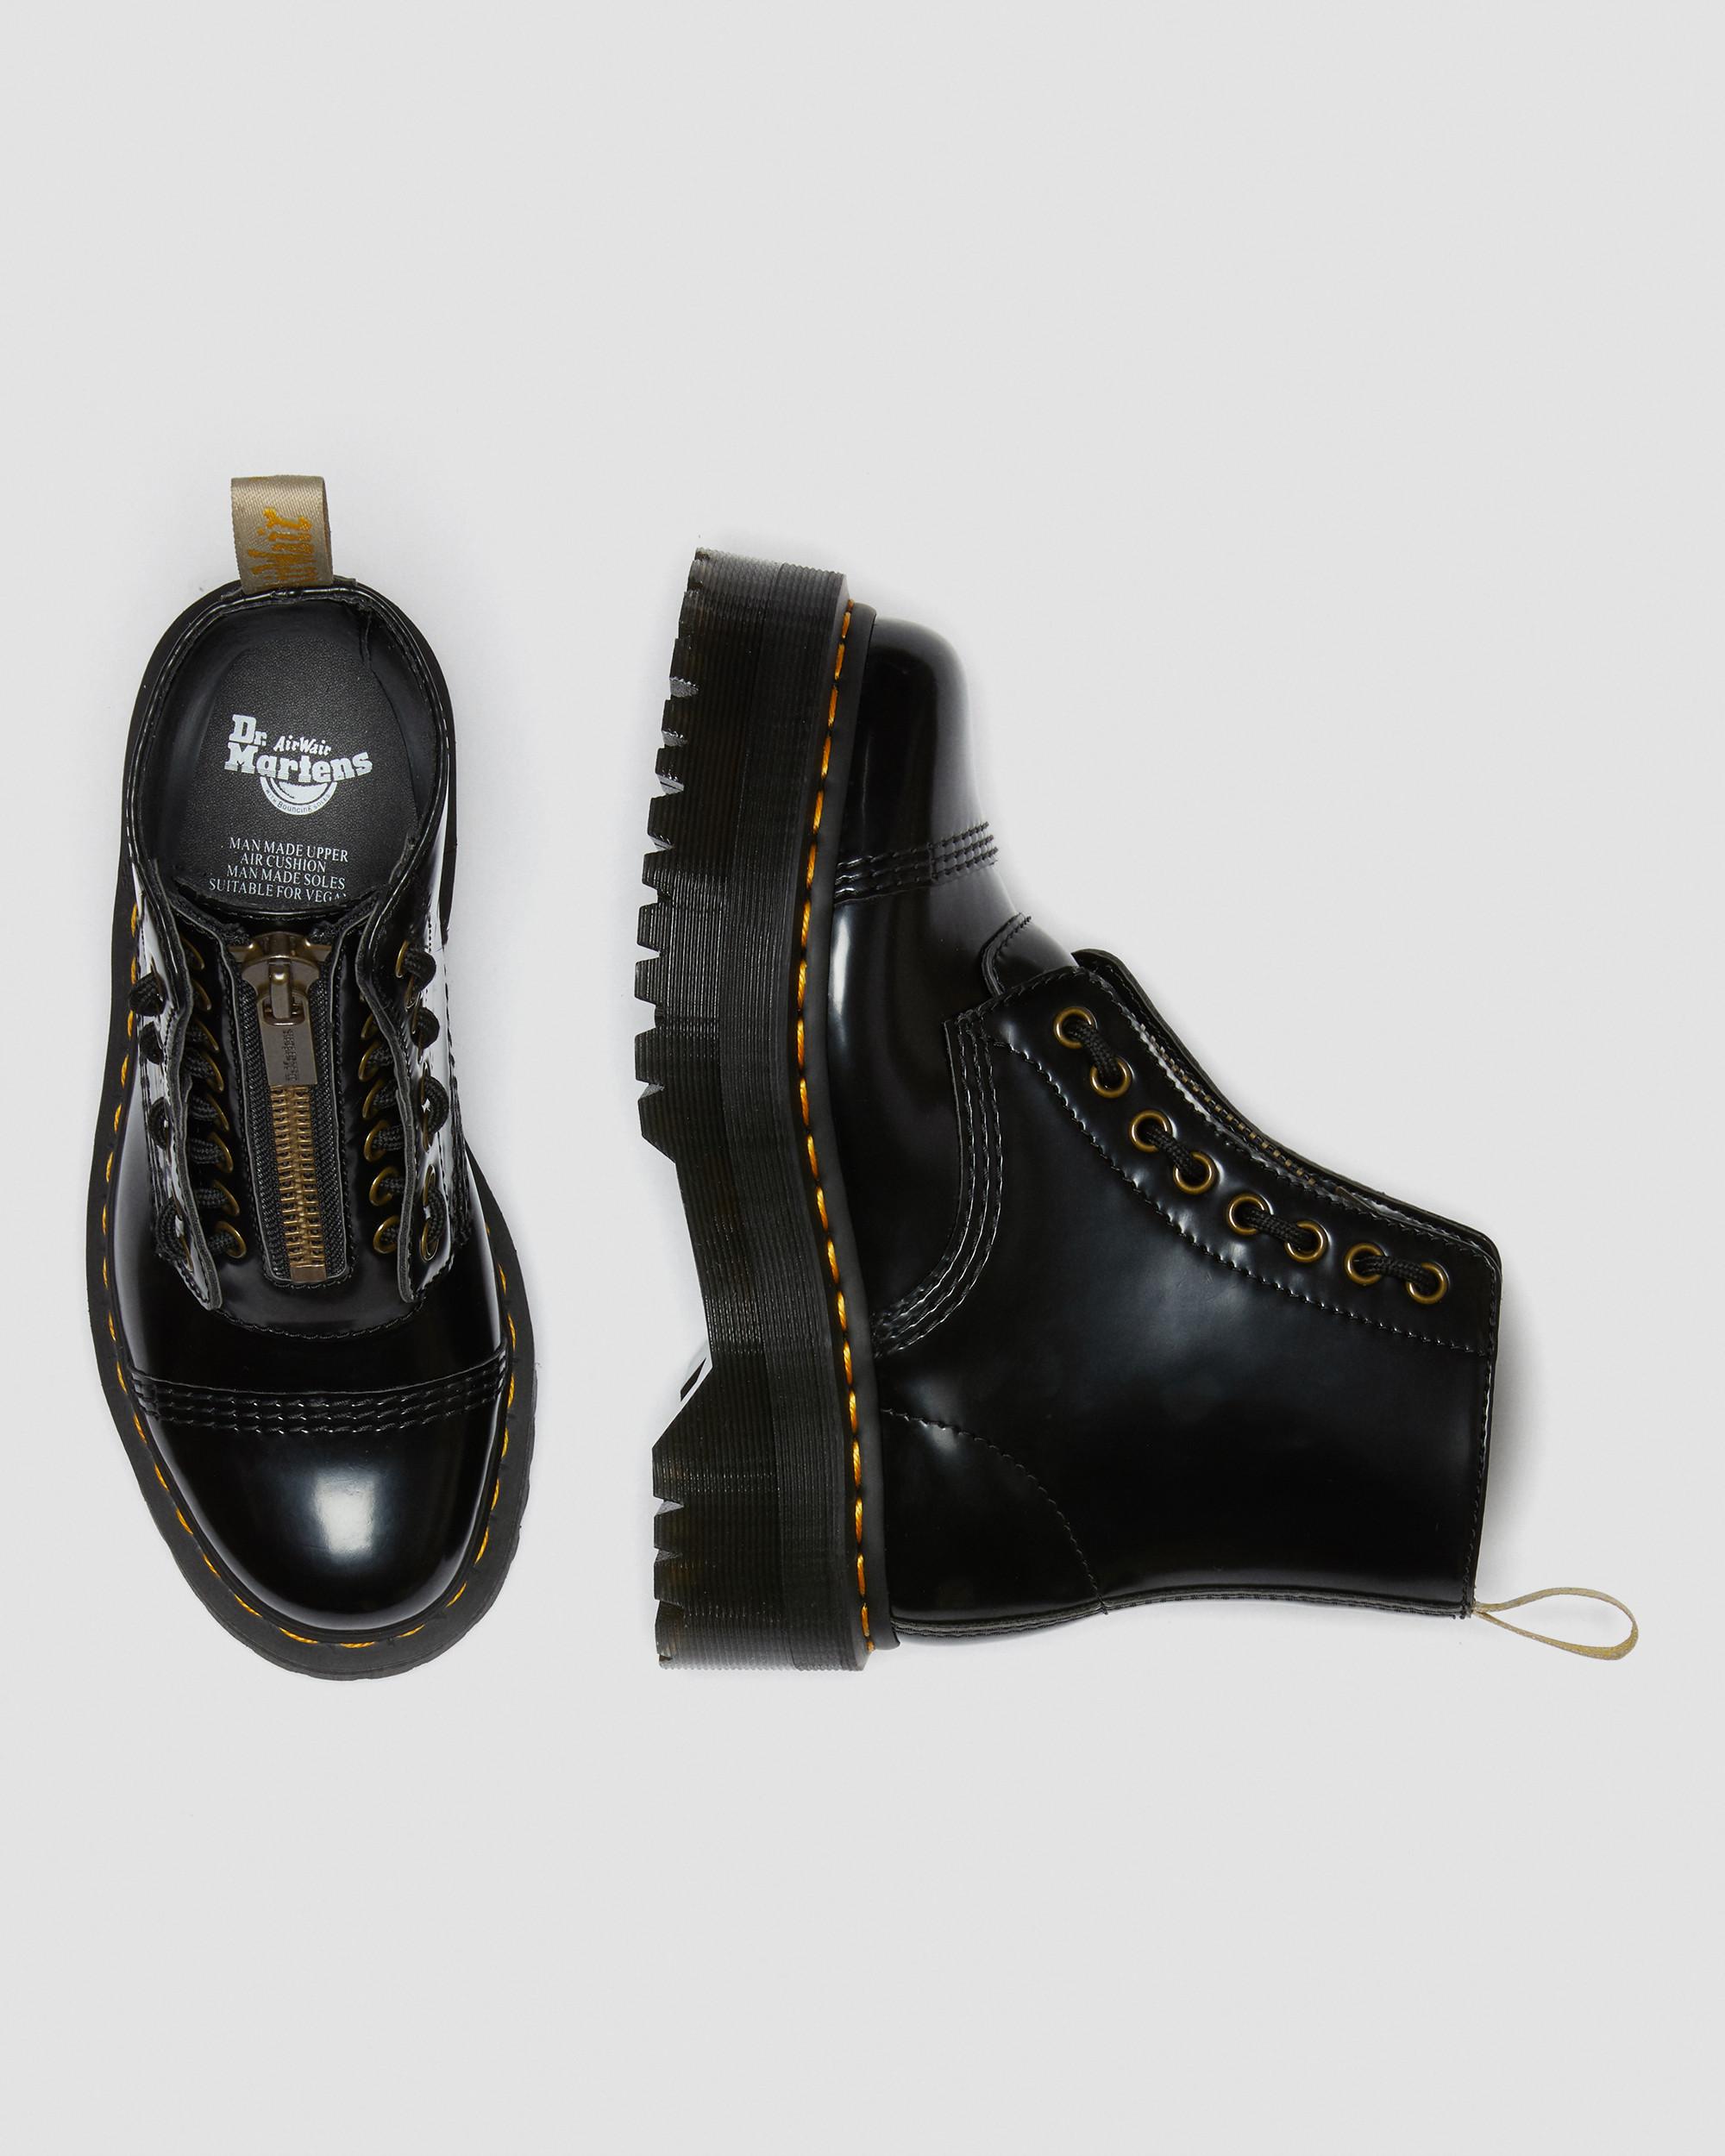 Sinclair Vegan Platform Boots in Black